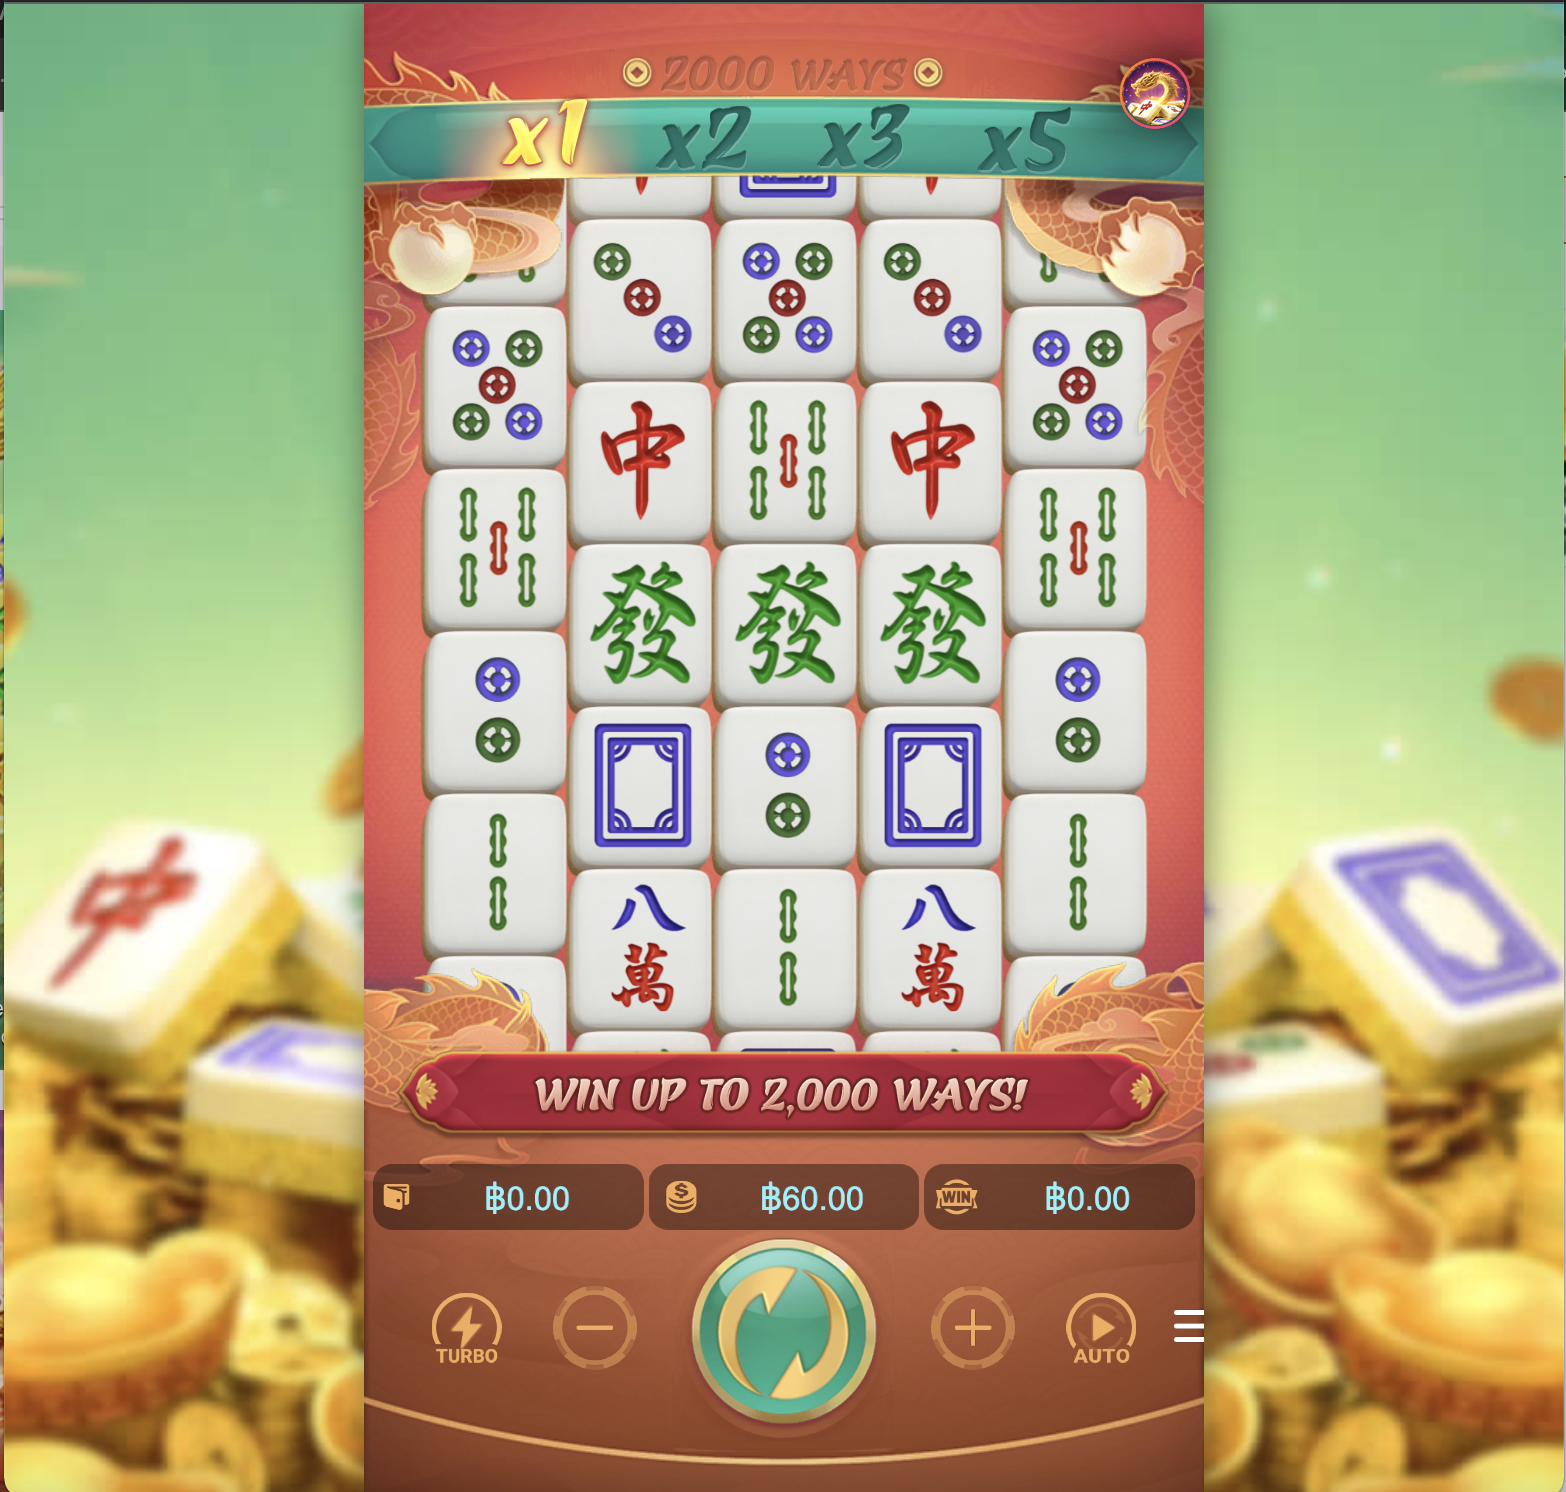 Graphics online casino games